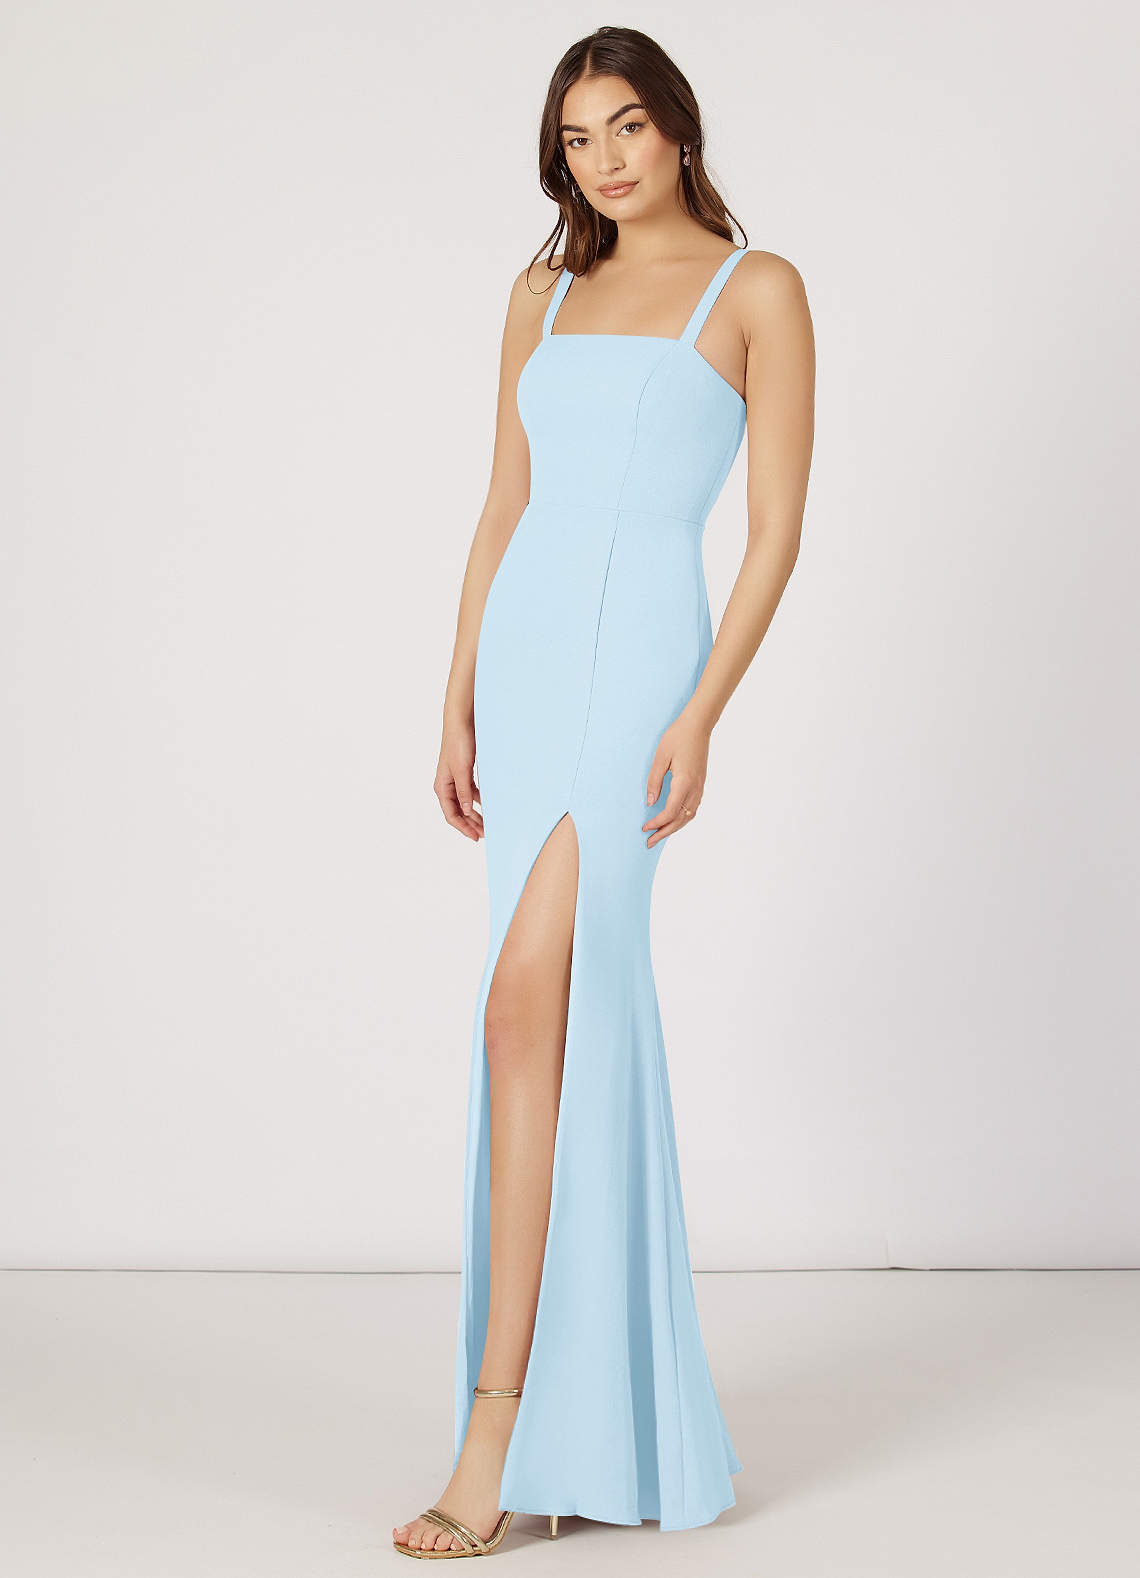 Azazie Gianetta Bridesmaid Dresses Mermaid Side Slit Stretch Crepe Floor-Length Dress image1